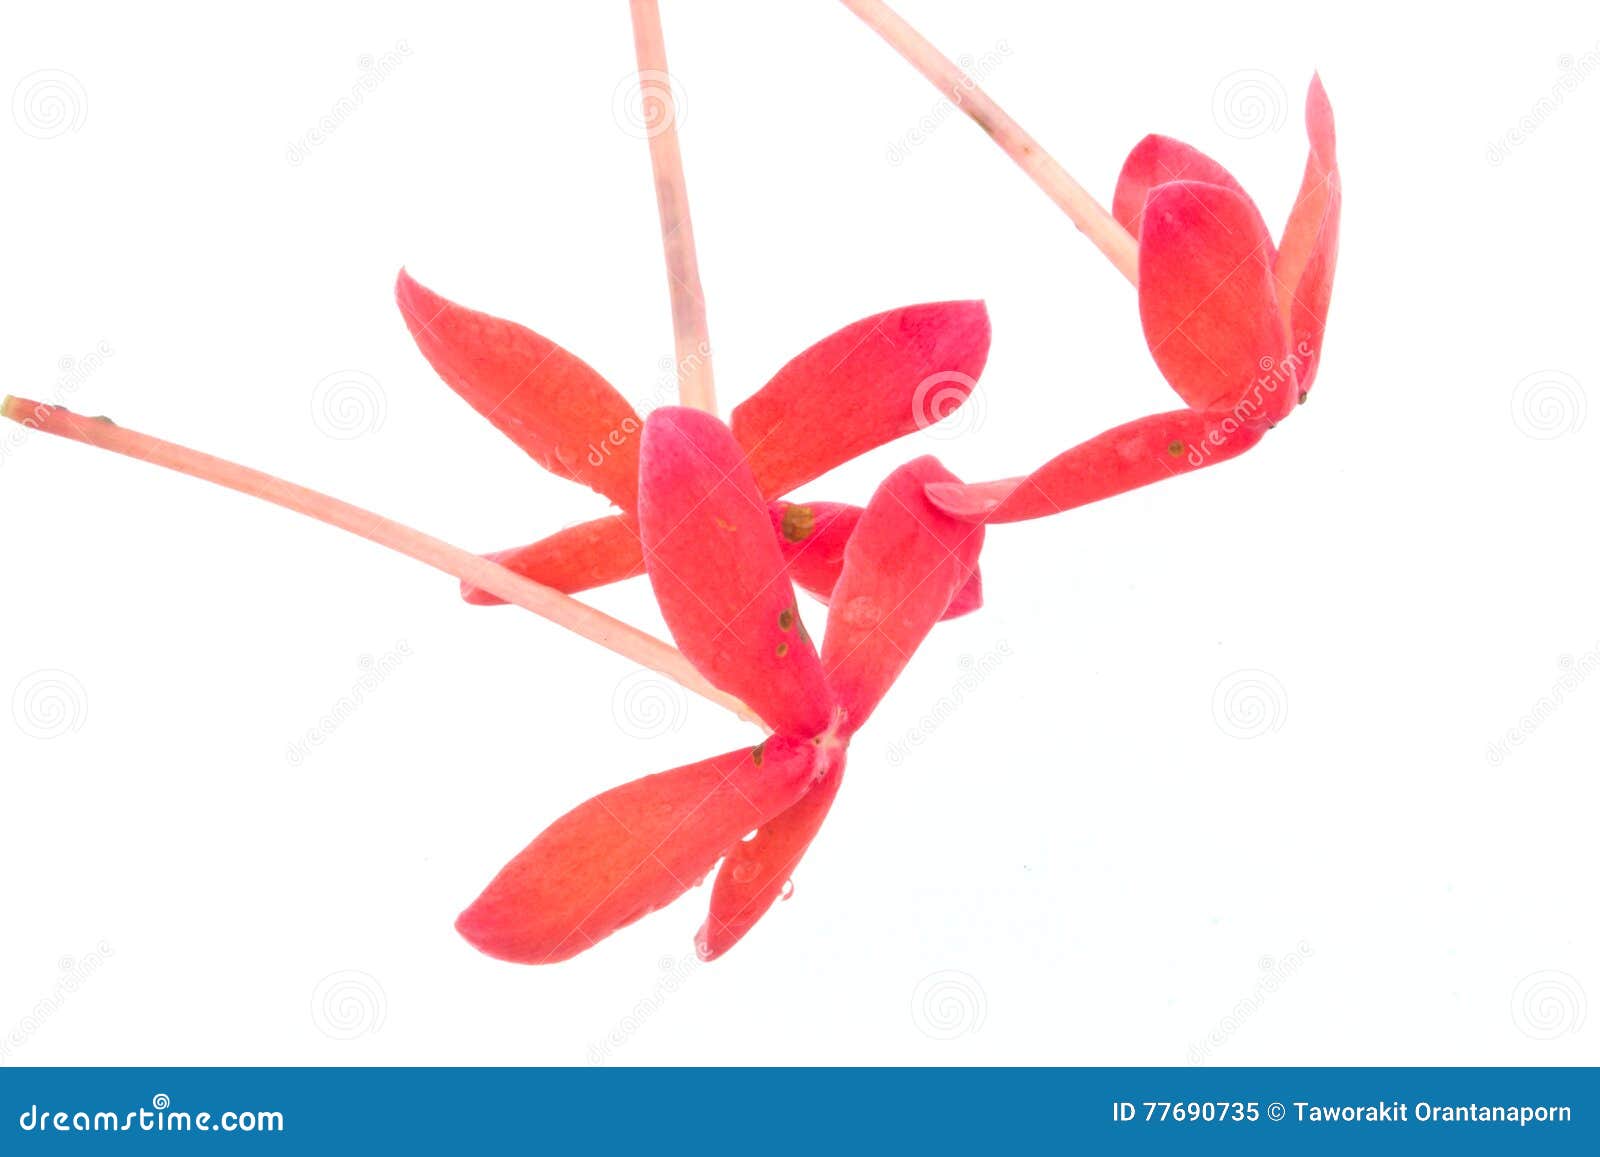 Flor roja dulce imagen de archivo. Imagen de anaranjado - 77690735